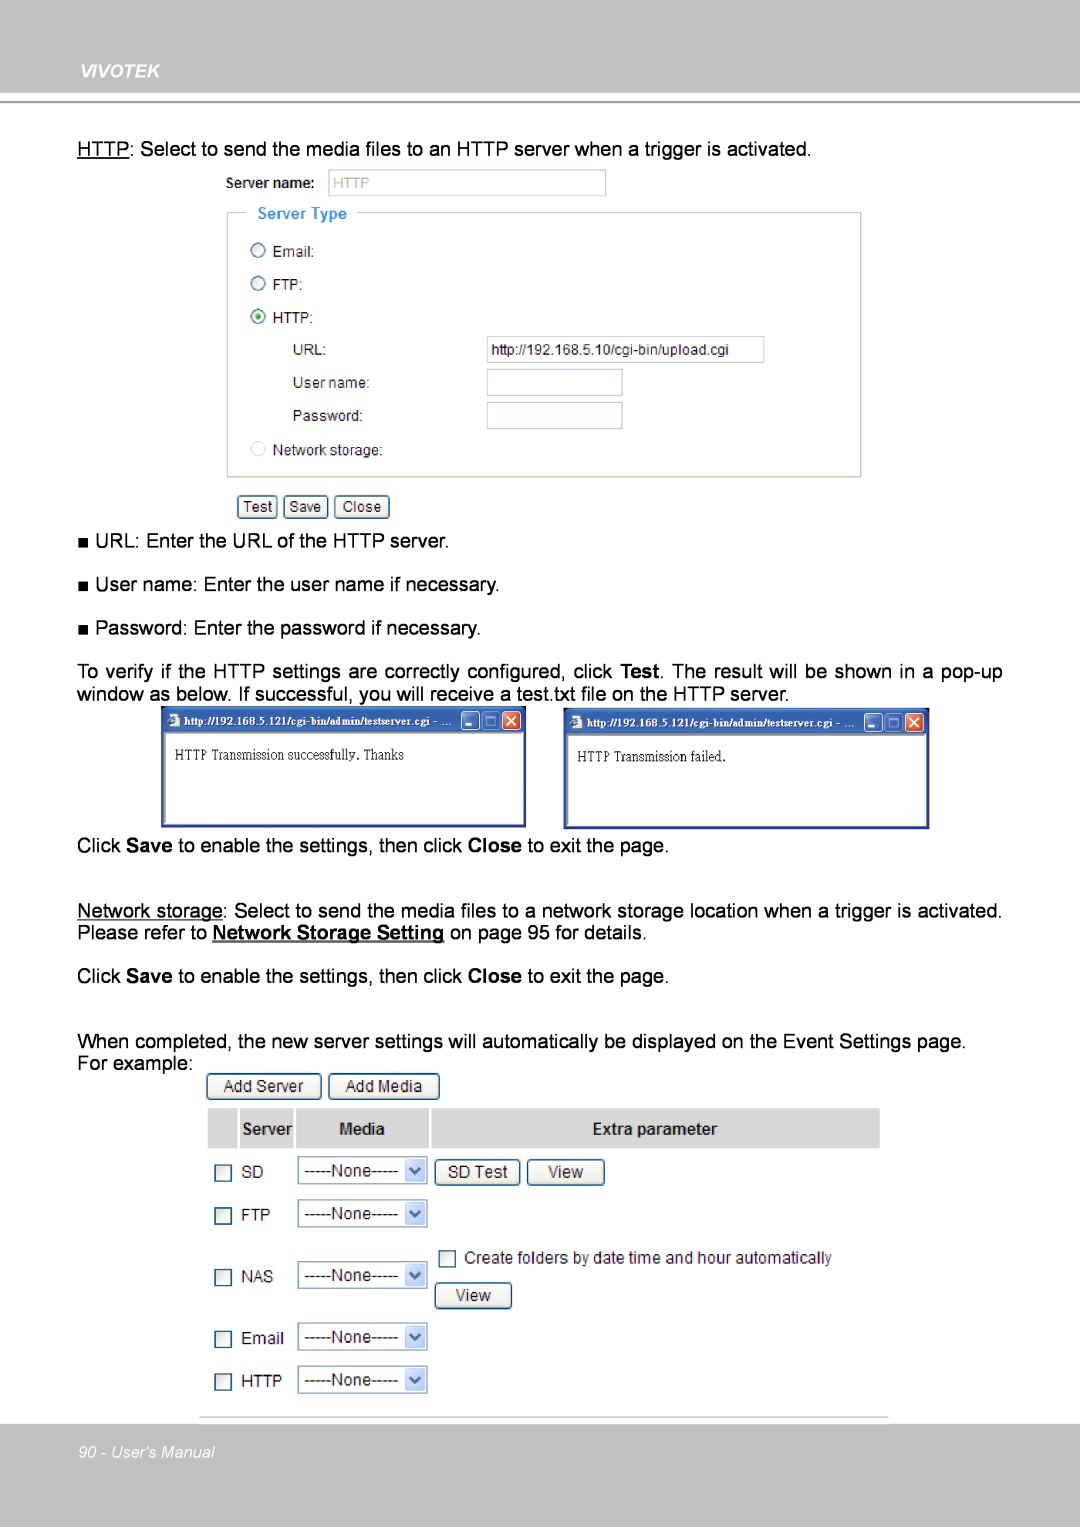 Vivotek IP8151 manual URL: Enter the URL of the HTTP server 